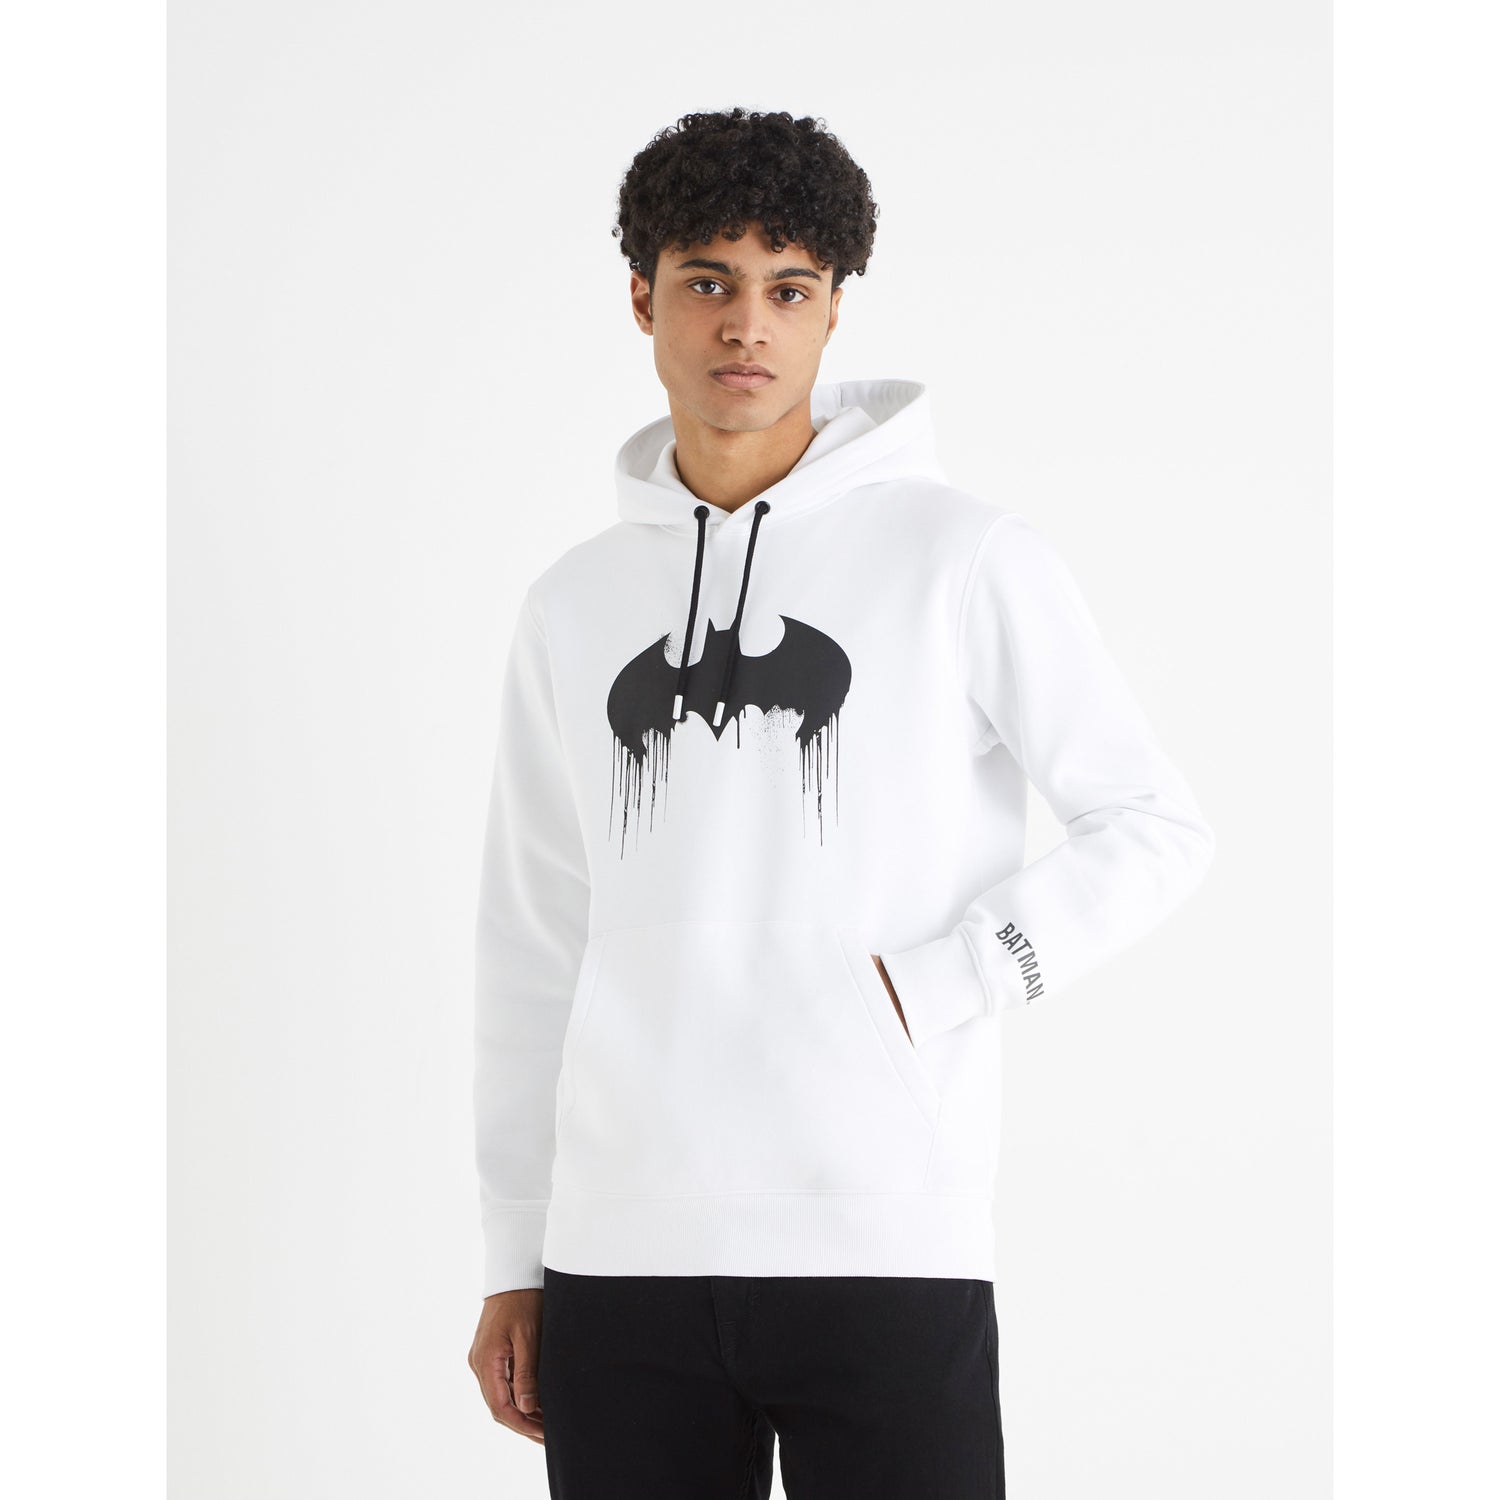 Batman - White Print Colourblocked Hooded Cotton Sweatshirt (LBEBATSW3)